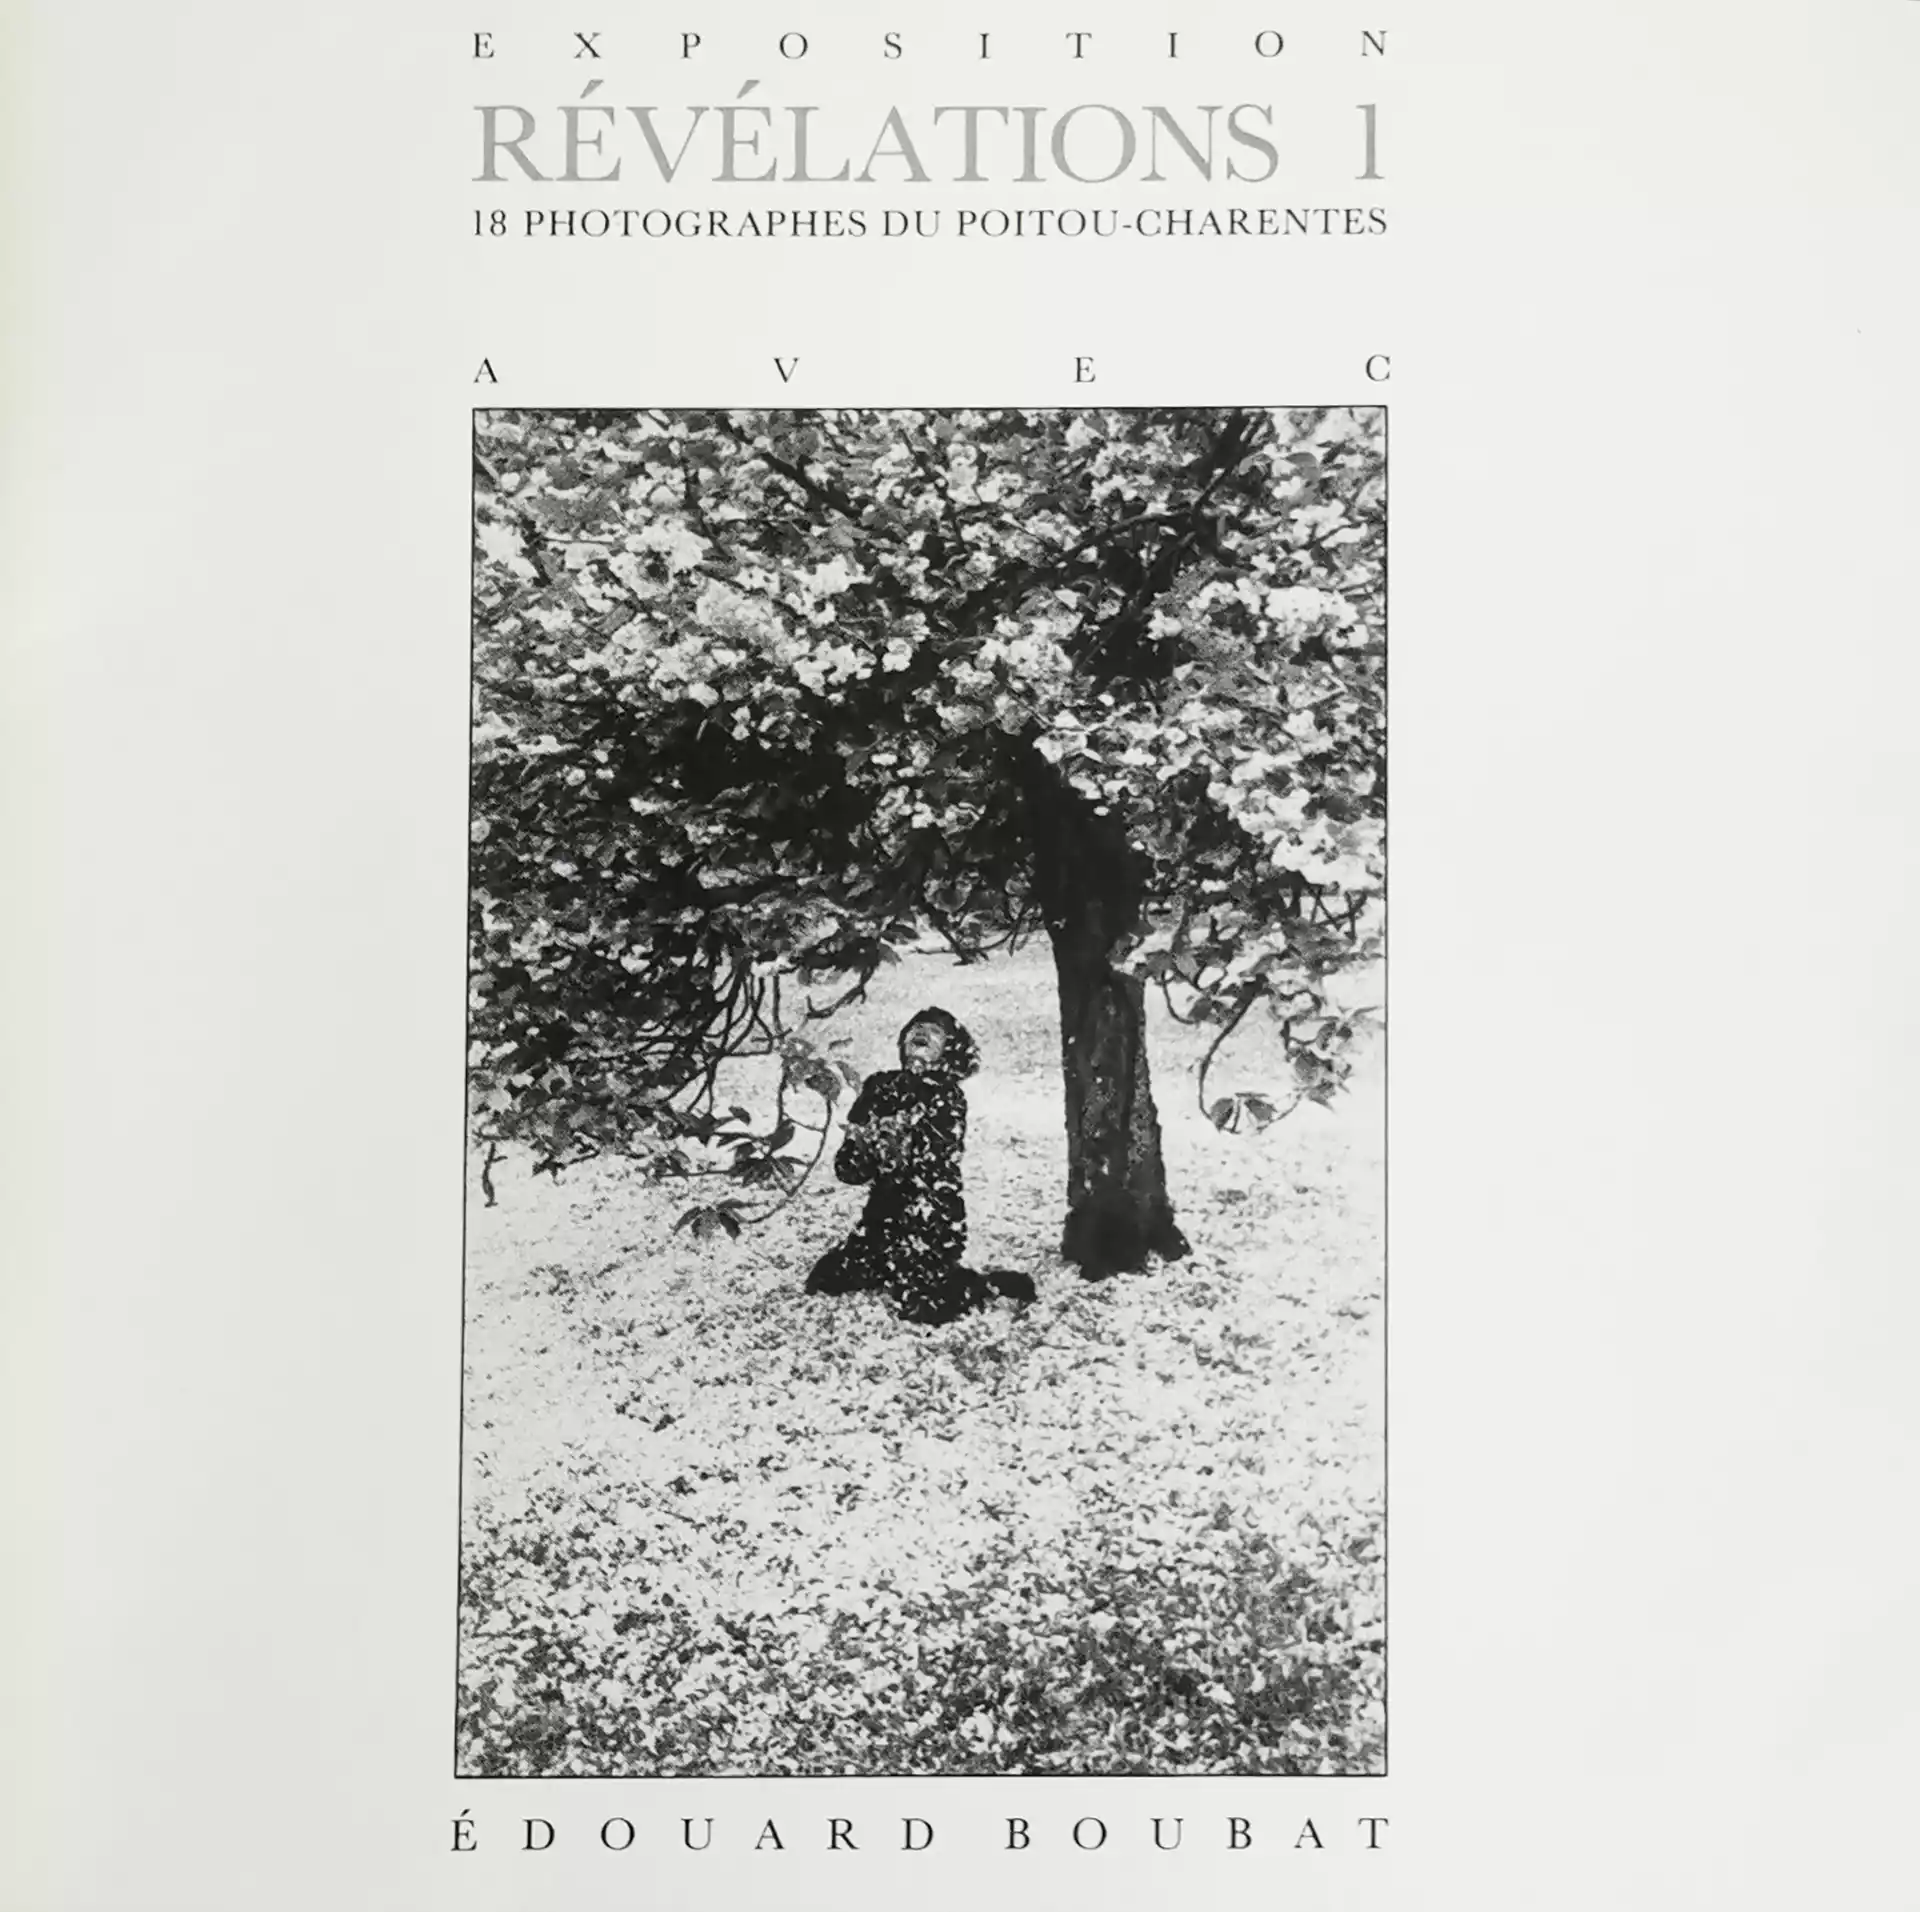 REVELATIONS 1 – Niort – 1989